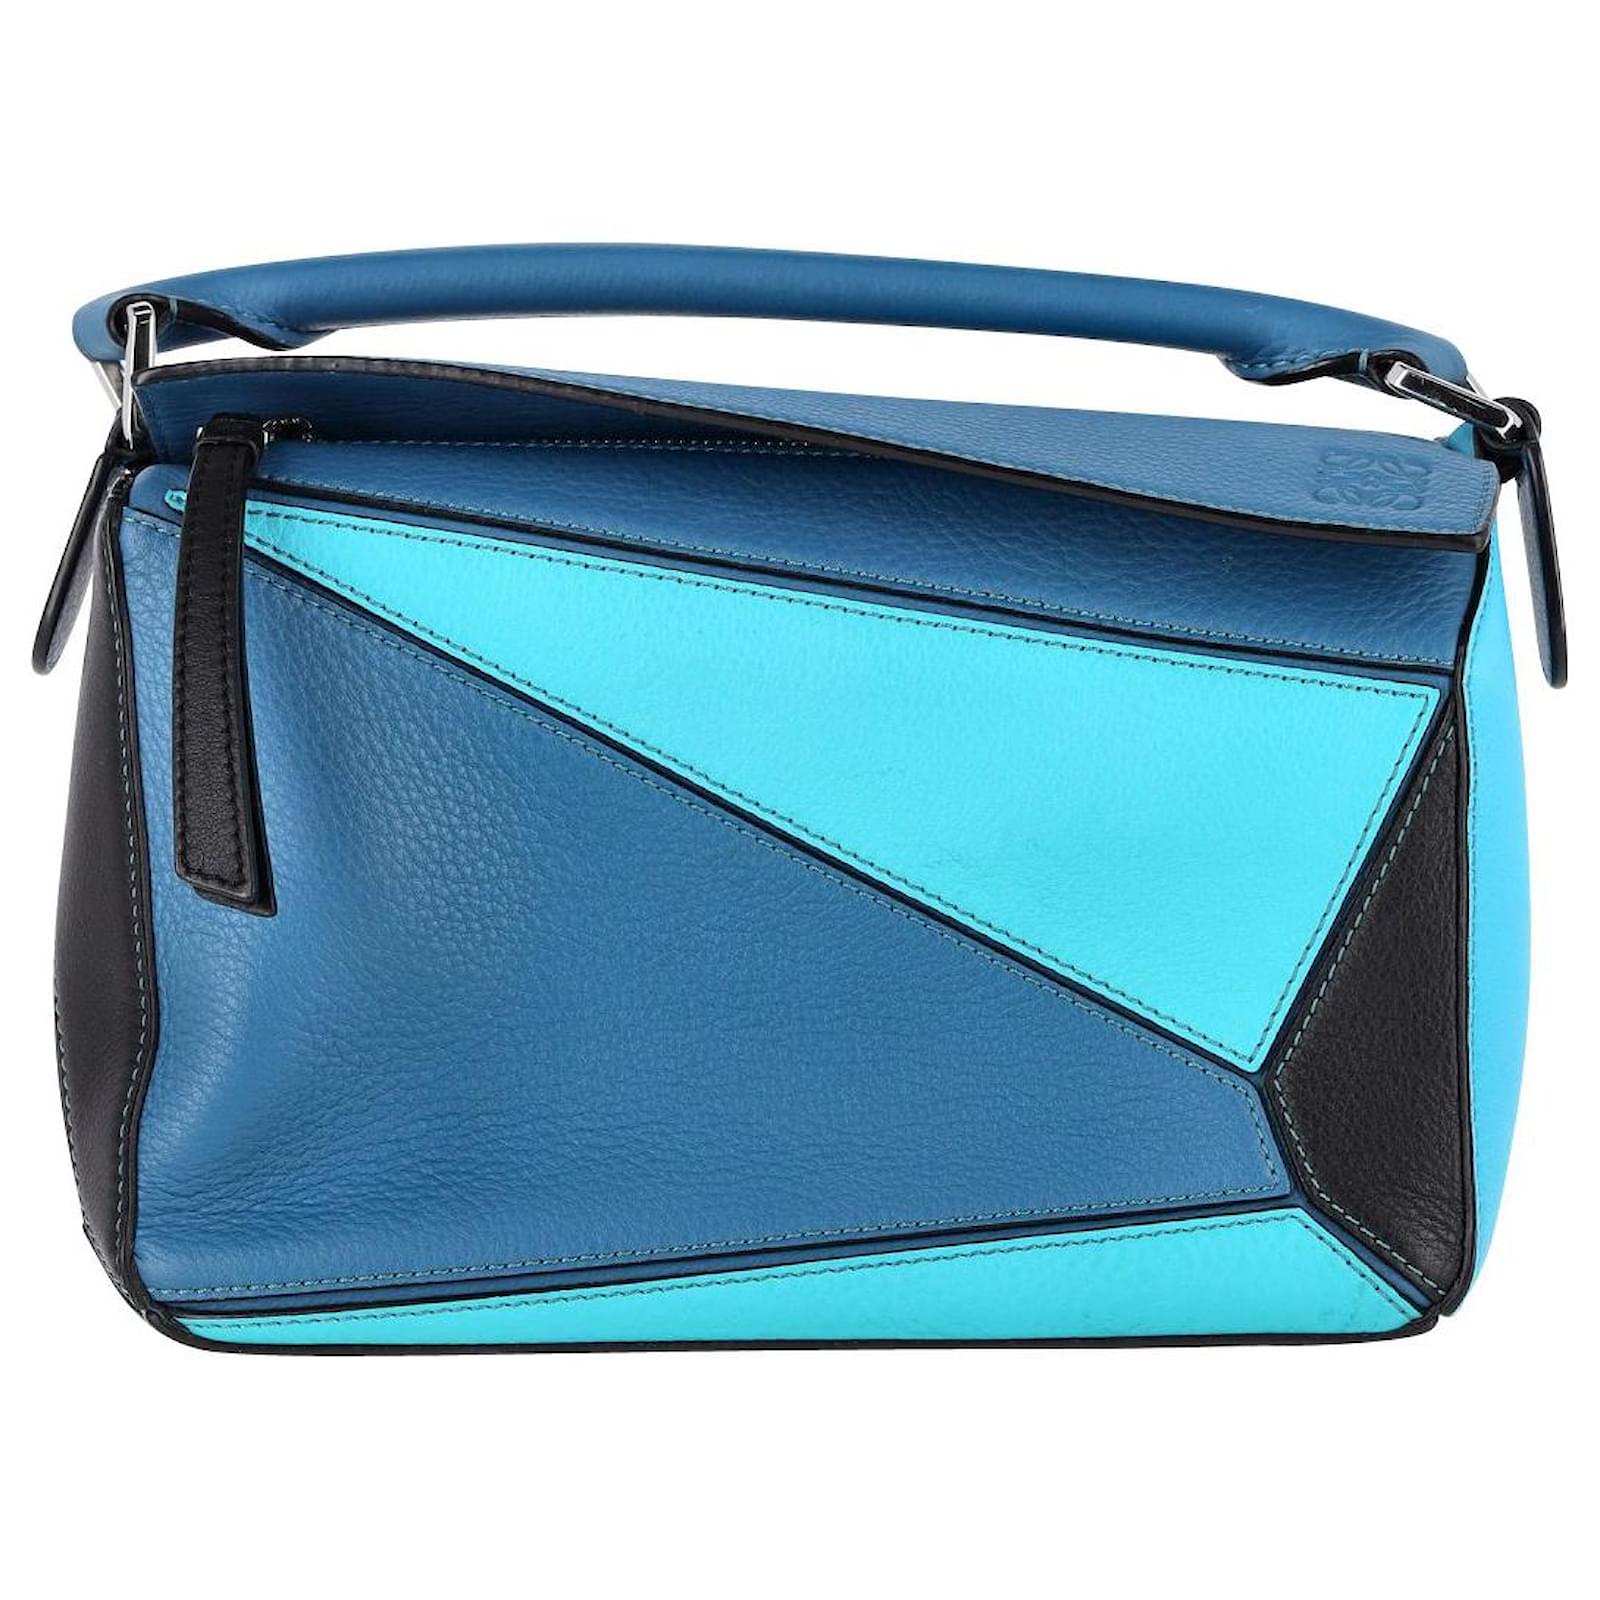 LOEWE Puzzle Mini Leather Shoulder Bag in Blue